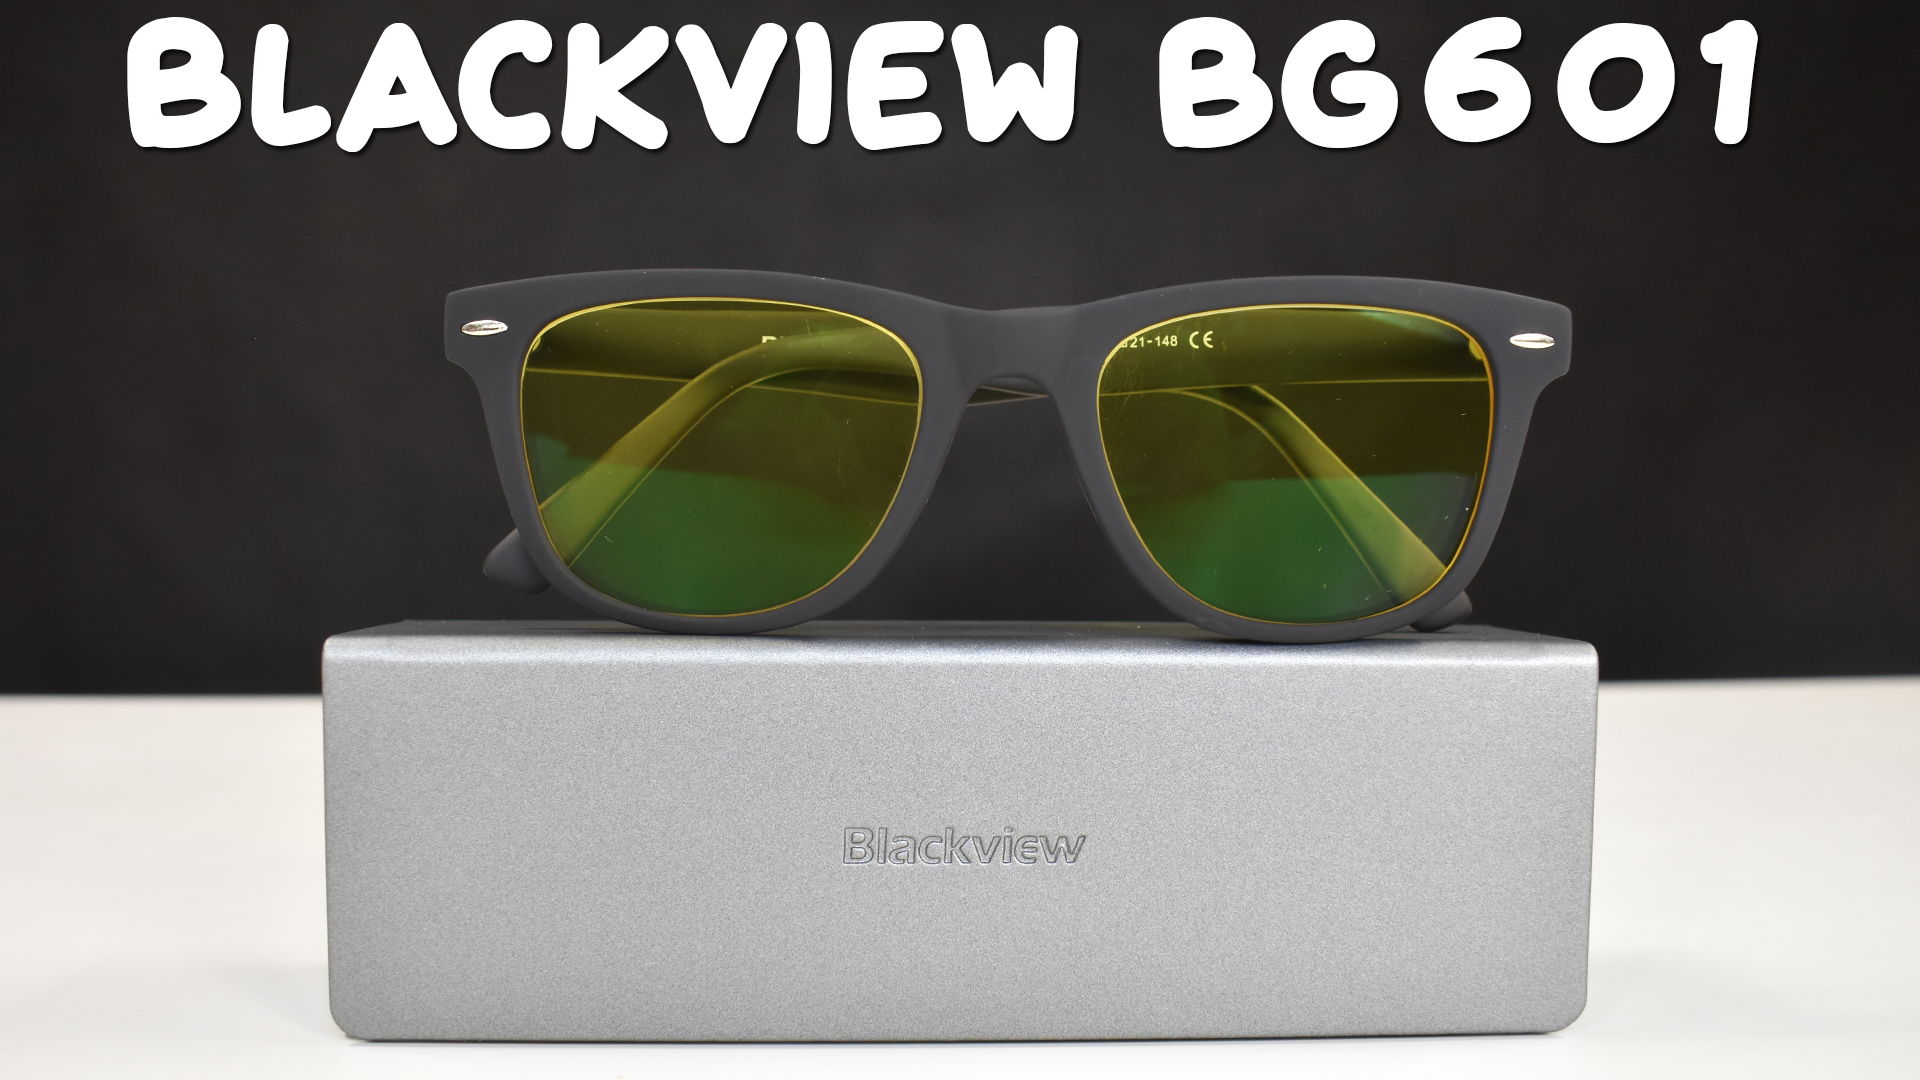 Очки Blackview BG601 распаковка с Алиэкспресс